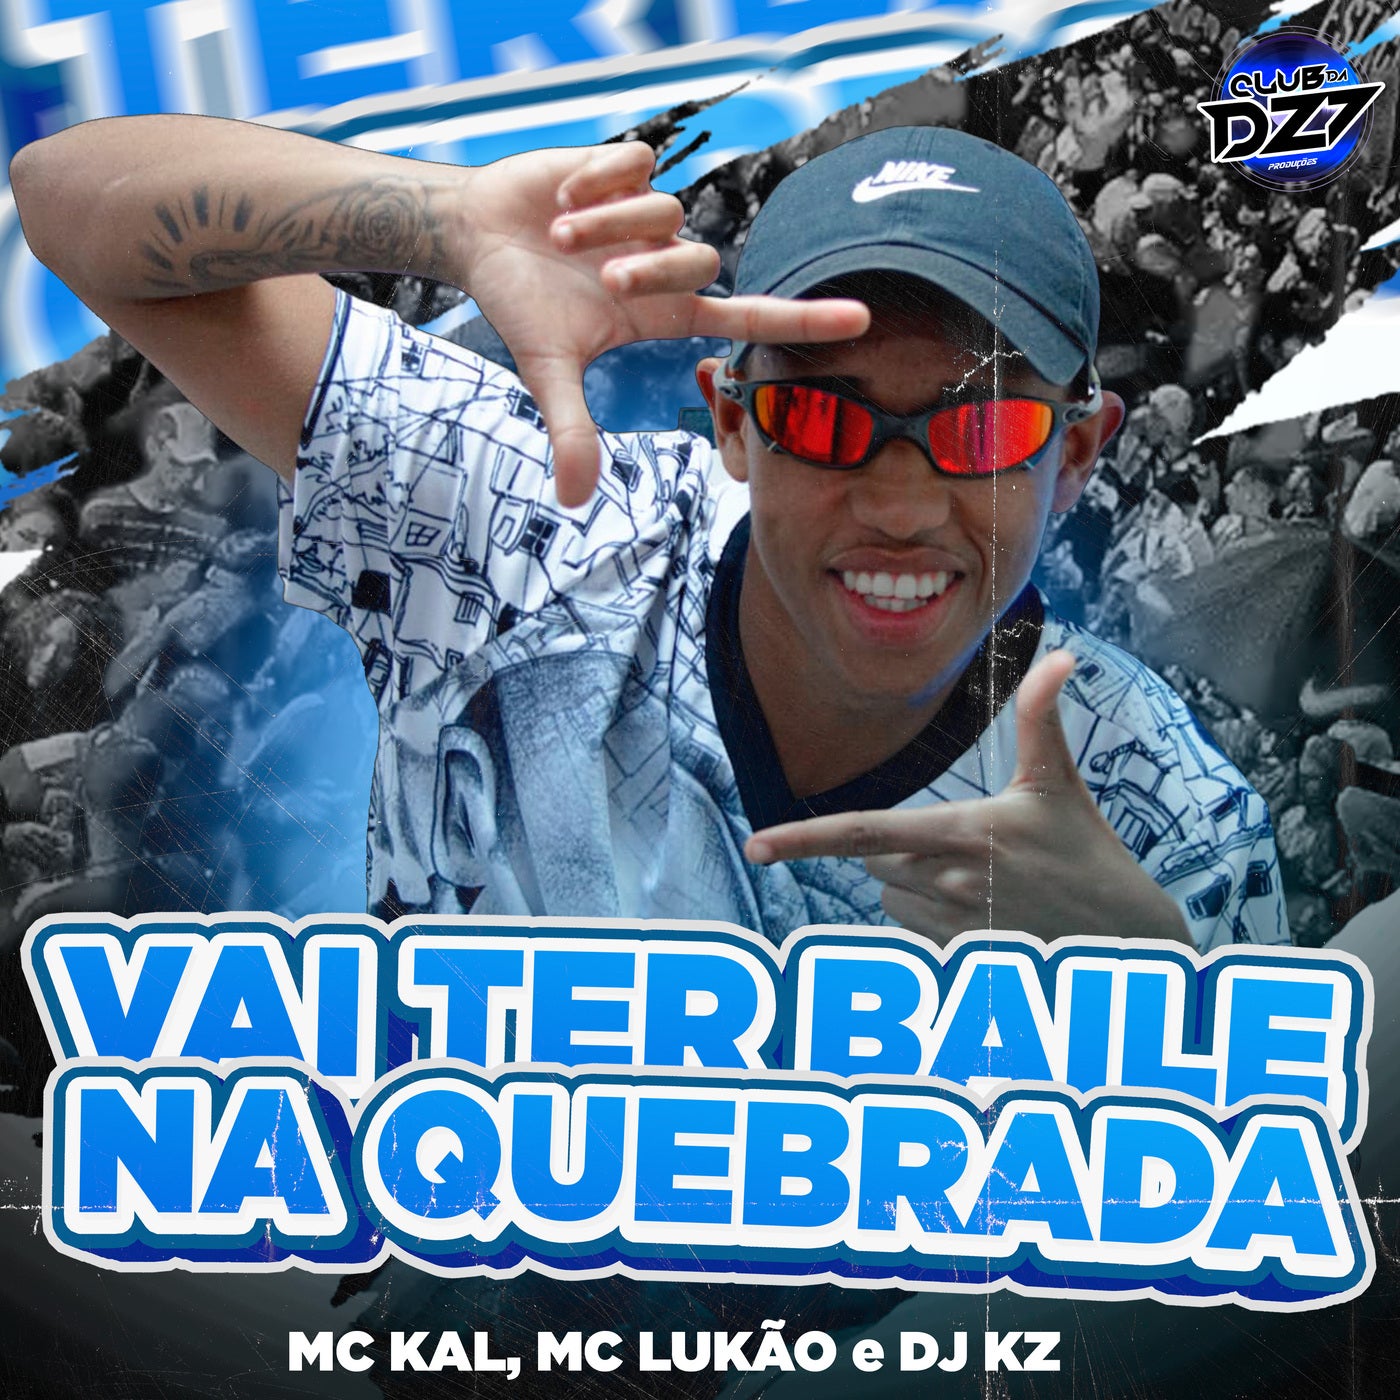 Cypher de Ladrão - song and lyrics by MC Lucks, MC Menor Da ZS, MC Kal, DJ  Maloka Original, DJ NpcSize